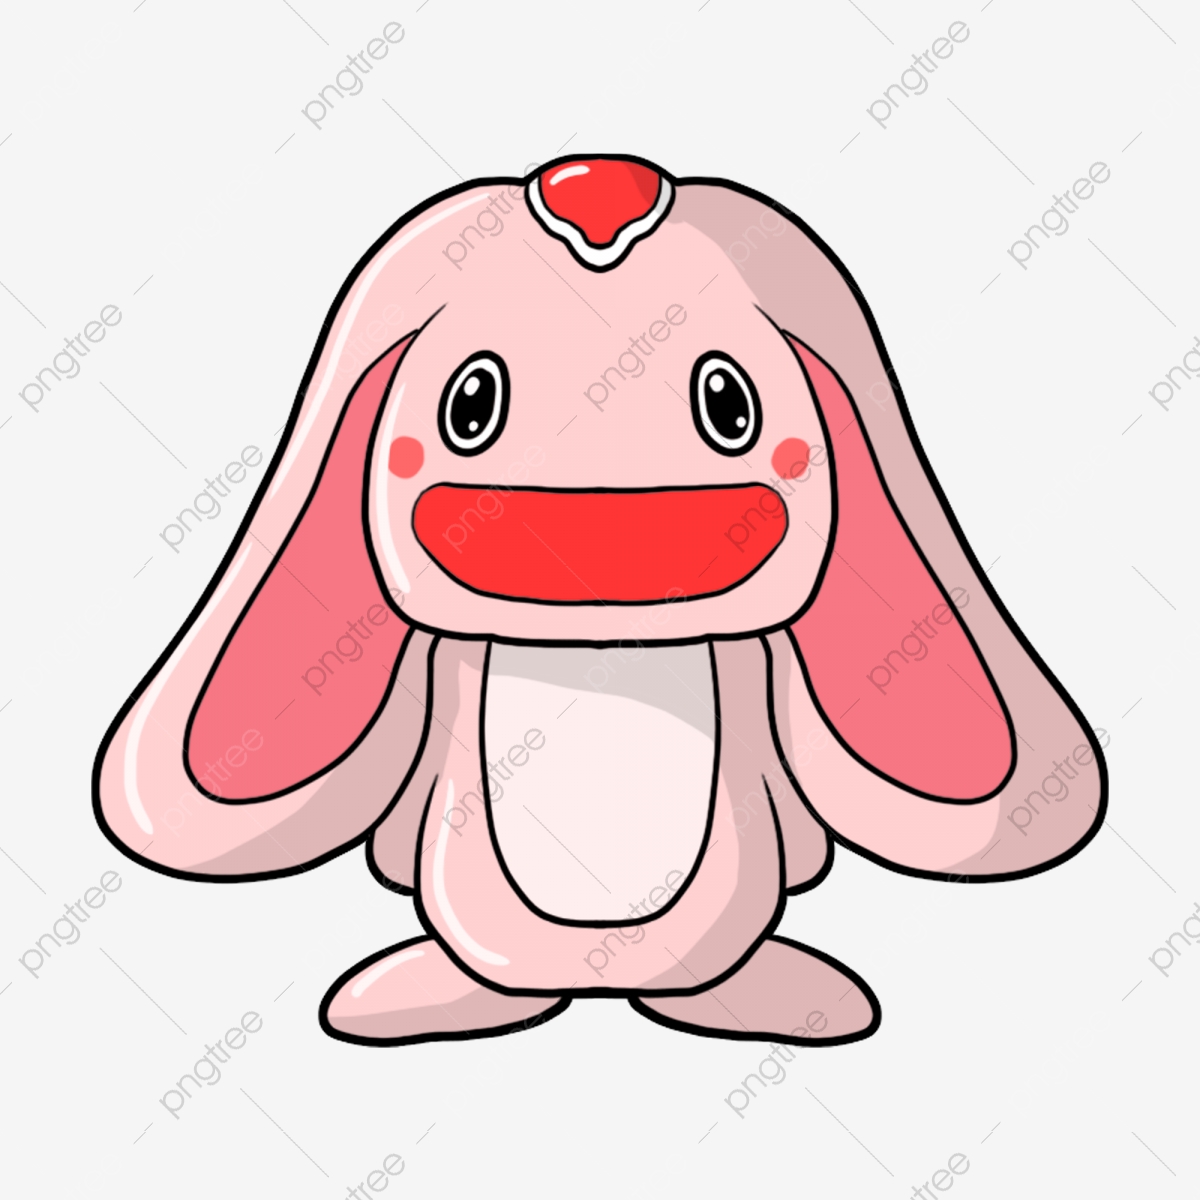 Ears clipart mouth. Pink big rabbit cartoon